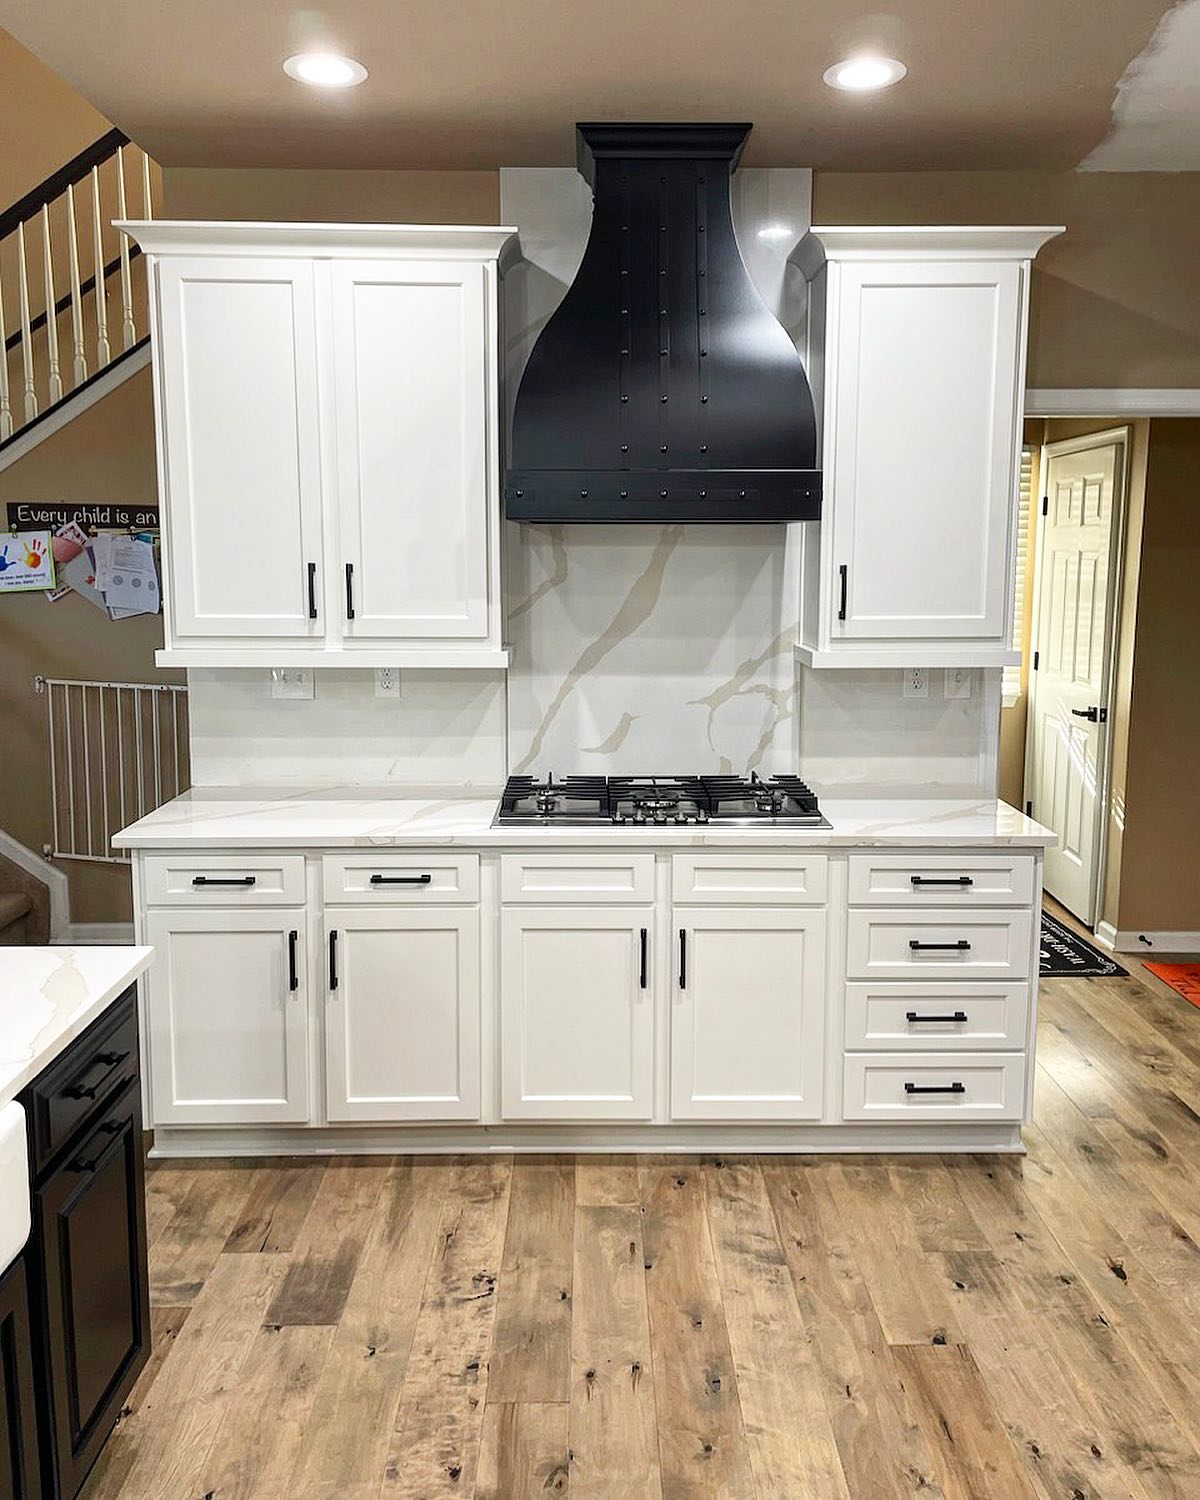 French-inspired kitchen design idea featuring white kitchen cabinets, marble kitchen countertops, stunning marble backsplash, chic range hood